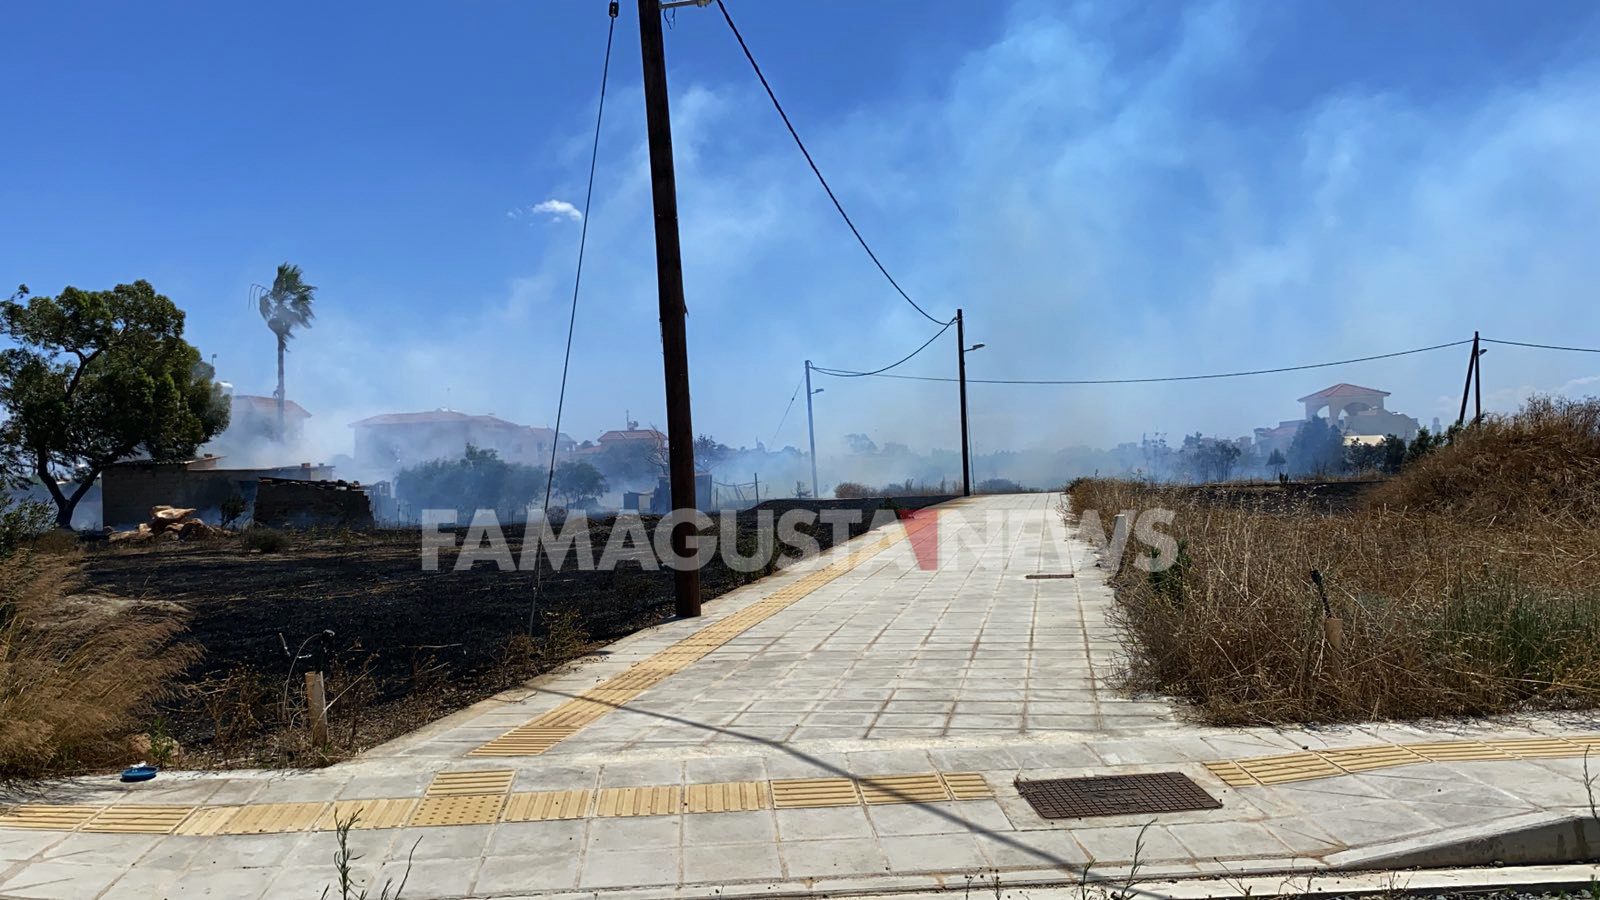 Viber image 2020 05 24 11 12 465 exclusive, Nea Famagusta, FIRE, Fire Department